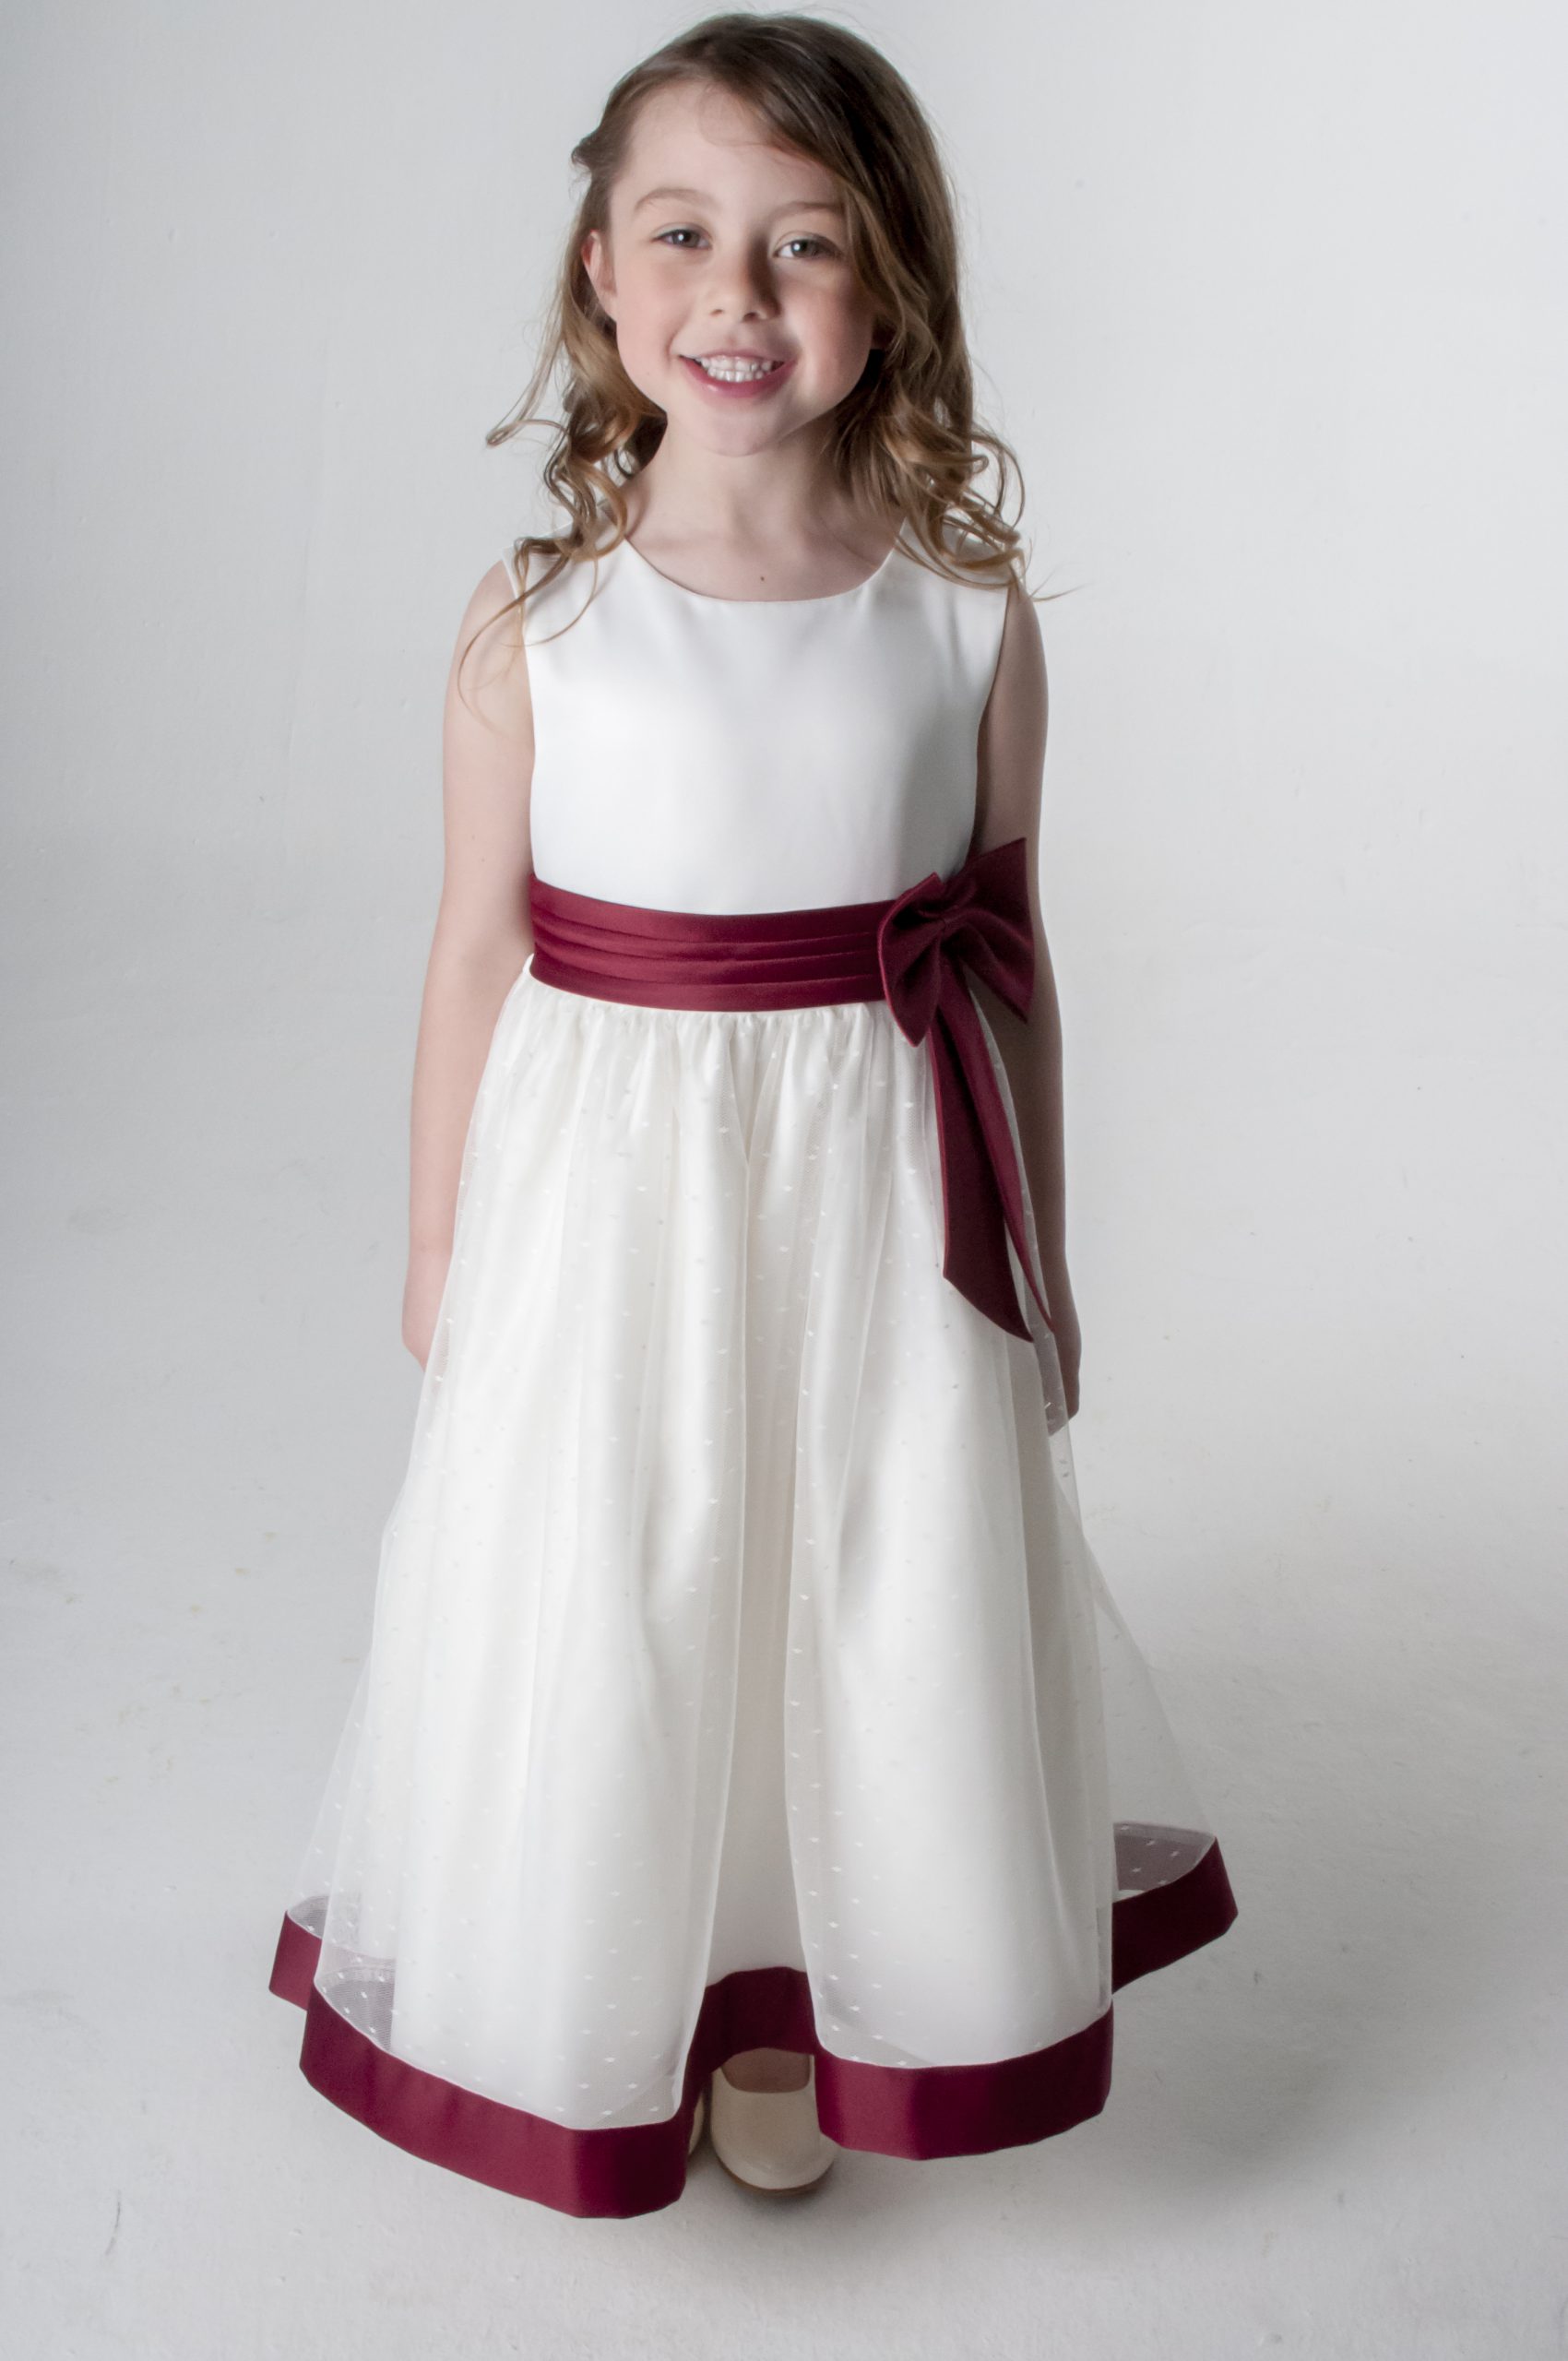 Girls Wine Dress Alice – Occasionwear for Kids